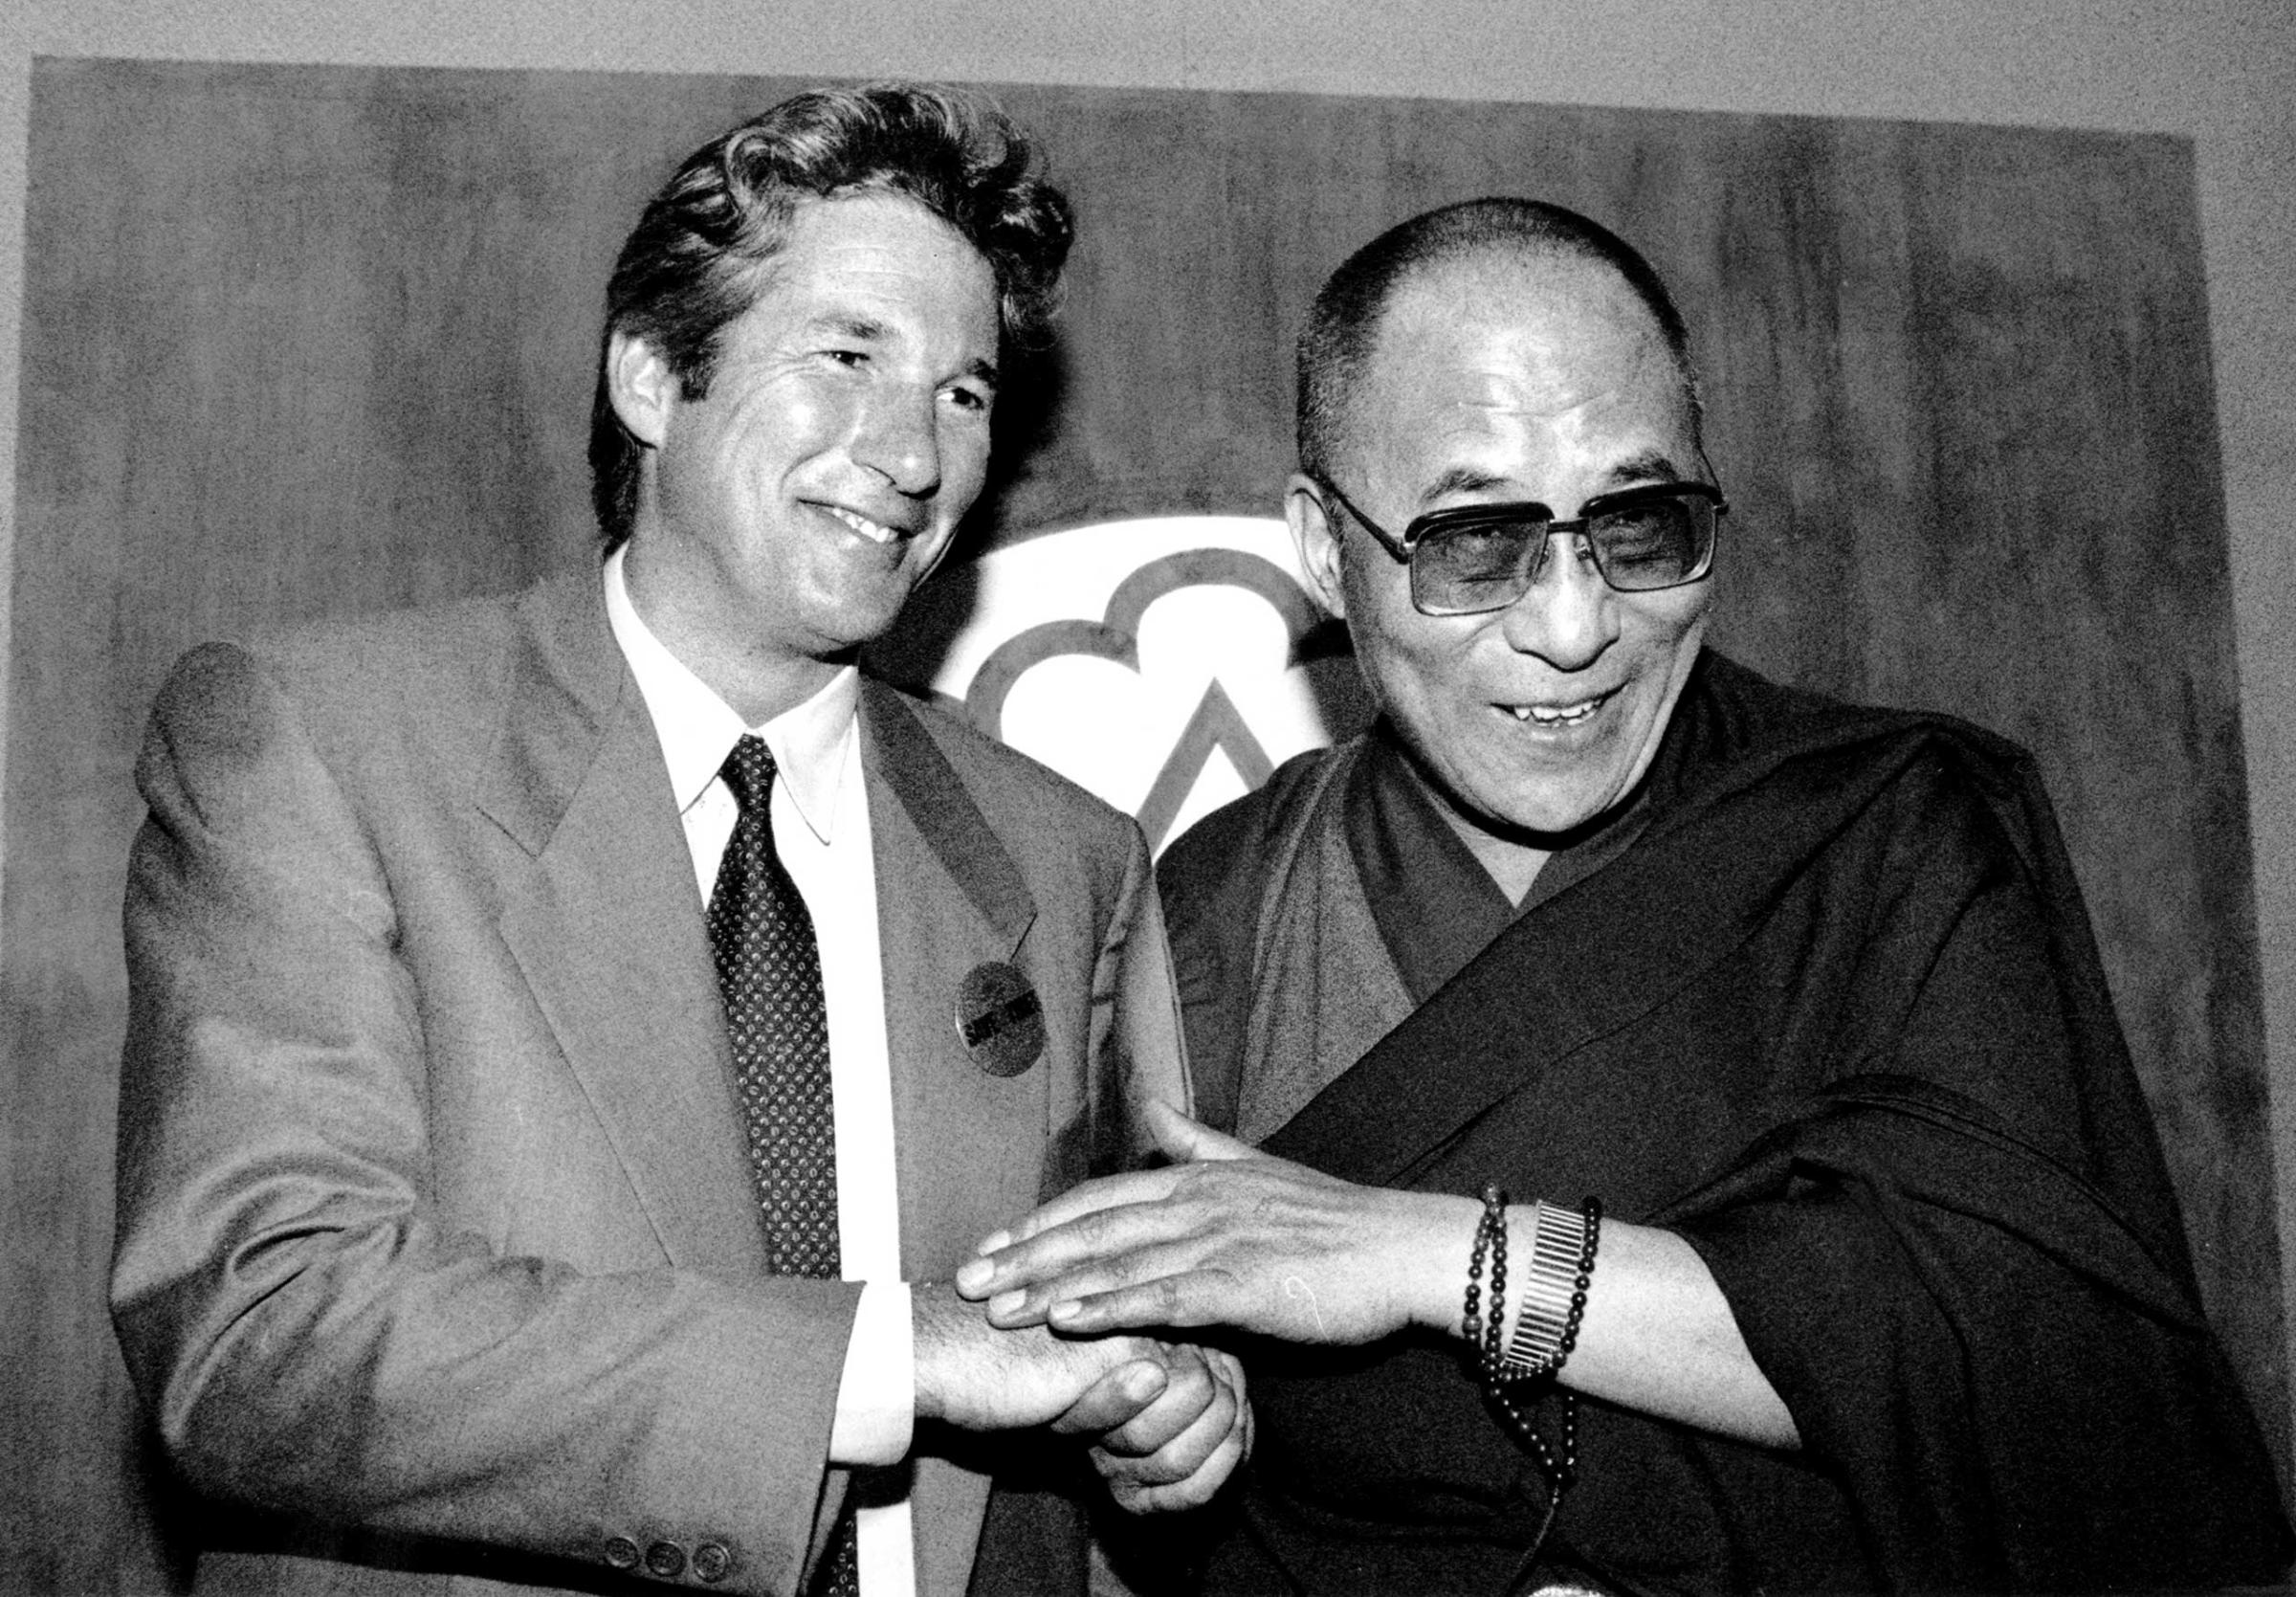 The Dalai Lama and his loyal follower, Richard Gere, in New York in Sept. 1990.